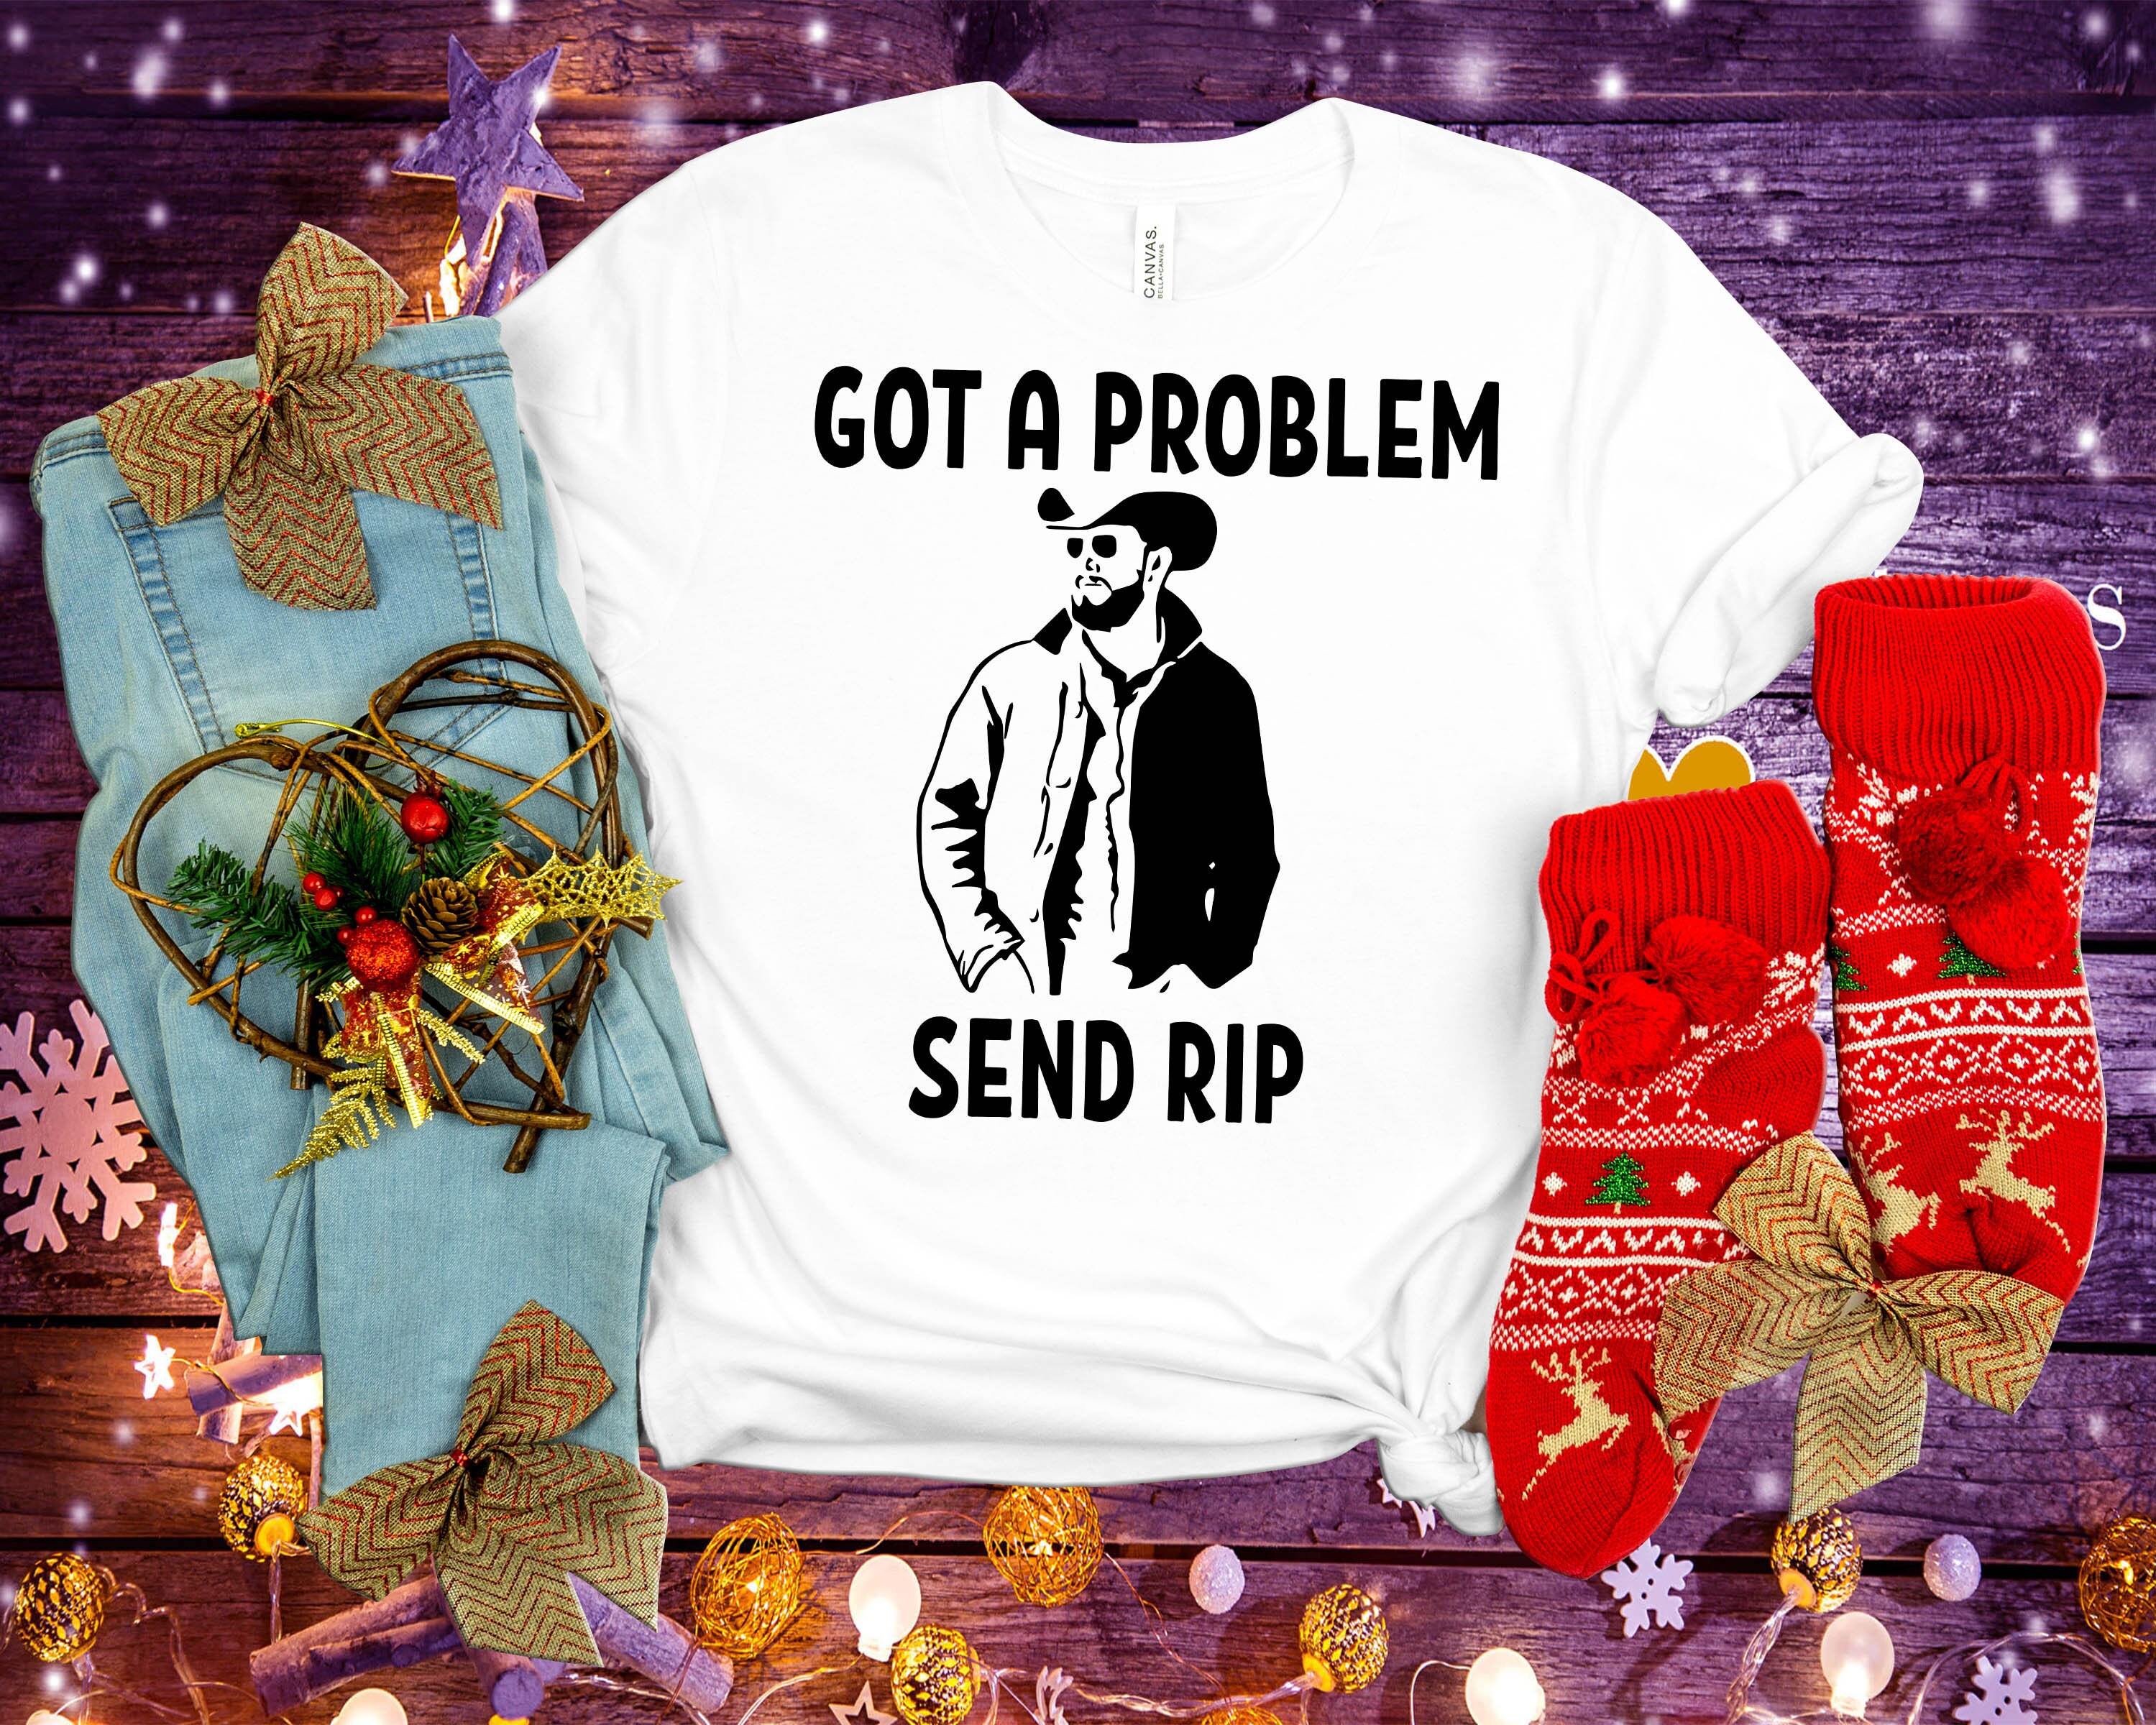 Got A Problem Send Rip T-shirt Vintage Christmas Handmade Tshirt For Friends Hoodie Sweatshirt Long Sleeve Sweater Gift For Family